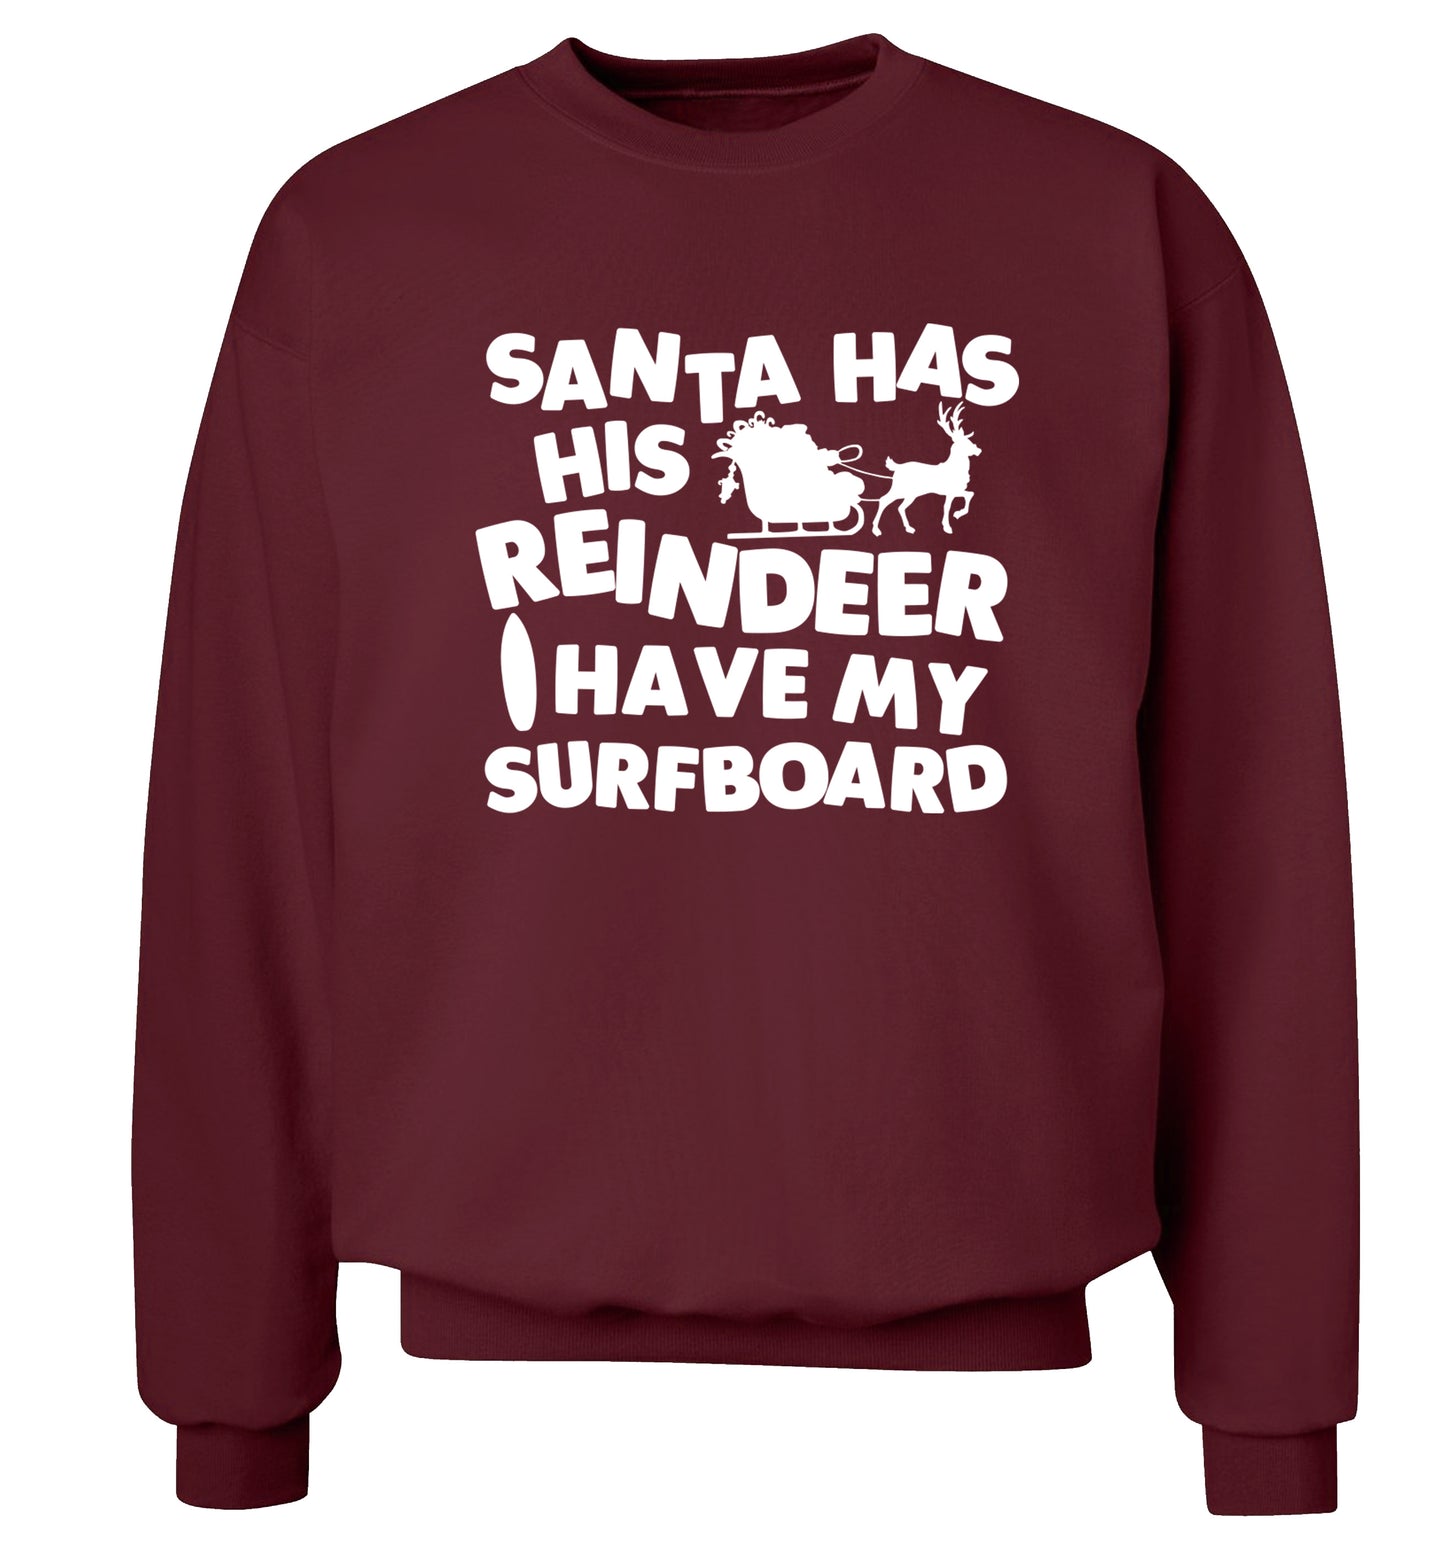 Santa has his reindeer I have my surfboard Adult's unisex maroon Sweater 2XL